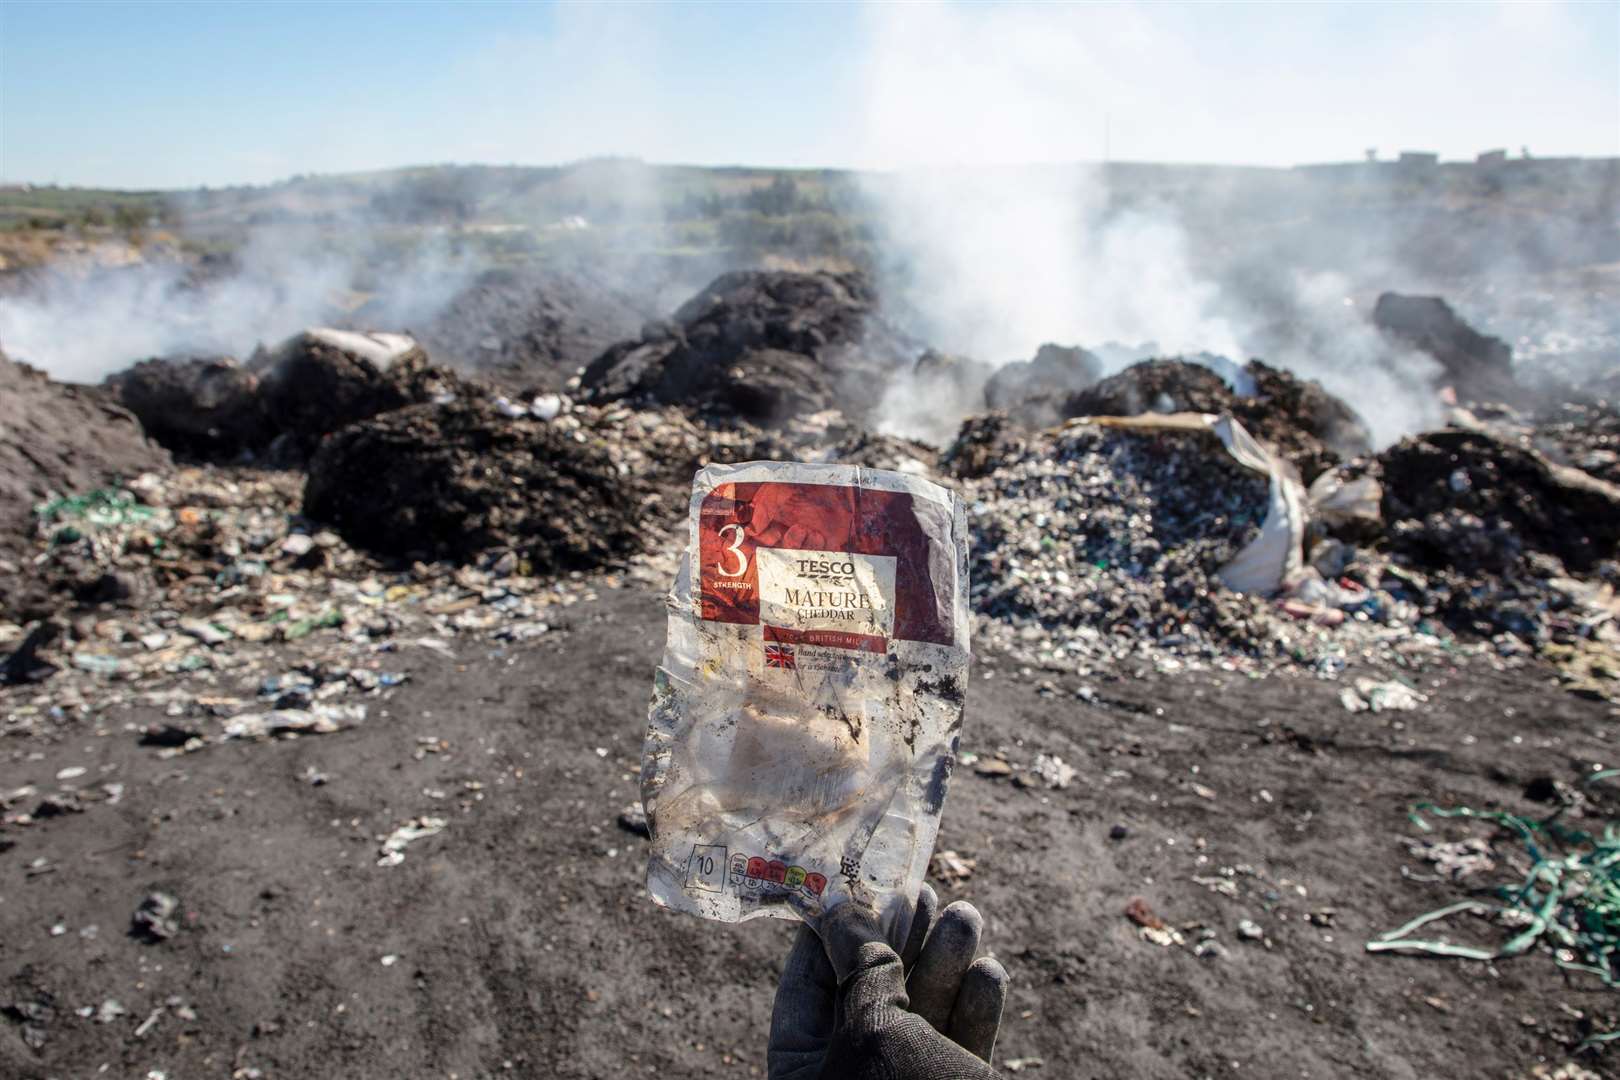 Waste dump at Karahan Kuyumcular, a village in the district of Seyhan, Adana Province in Turkey (Greenpeace)